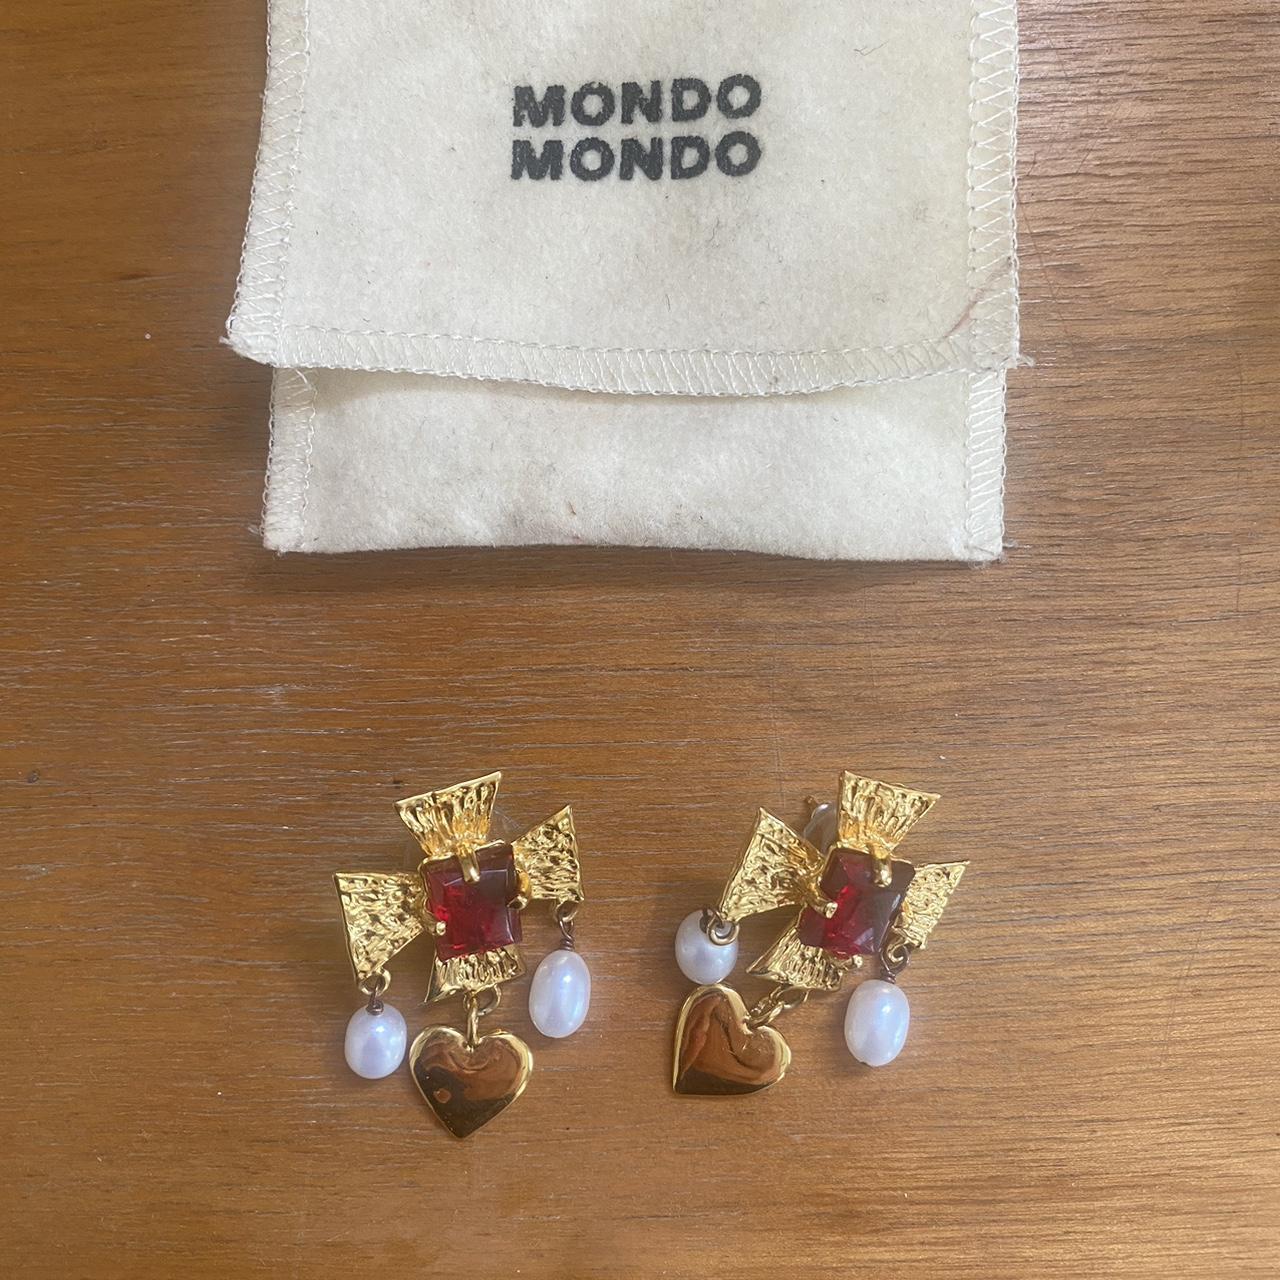 Mondo Mondo Women's Jewelry